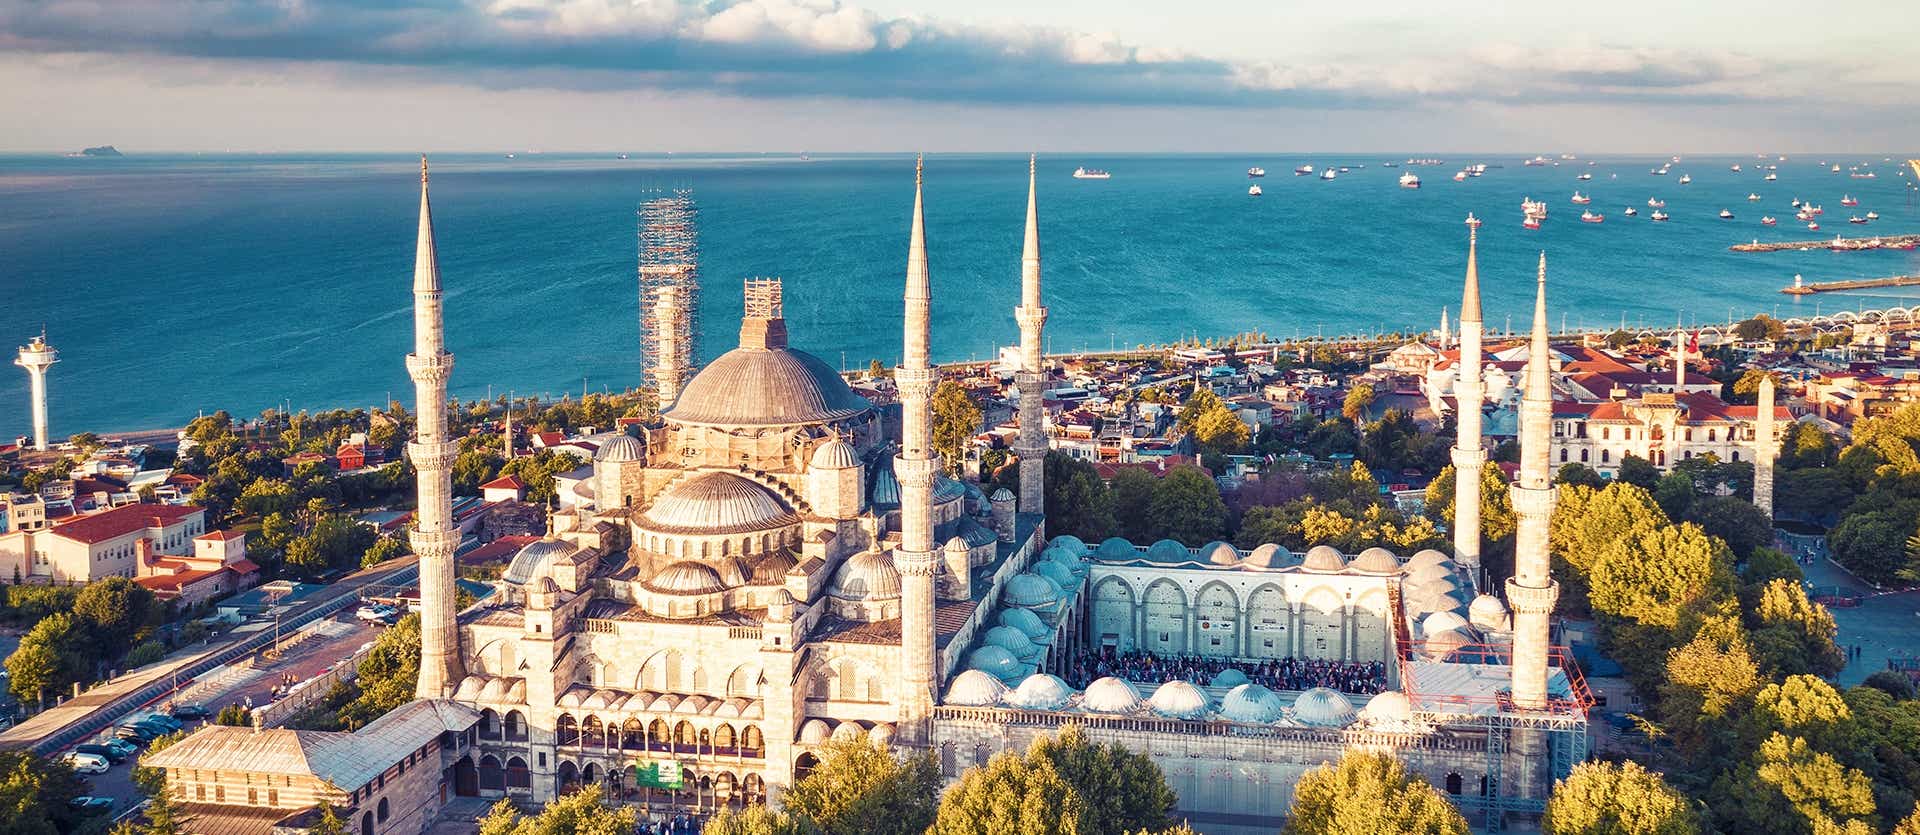 The Blue Mosque <span class="iconos separador"></span> Istanbul <span class="iconos separador"></span> Turkey